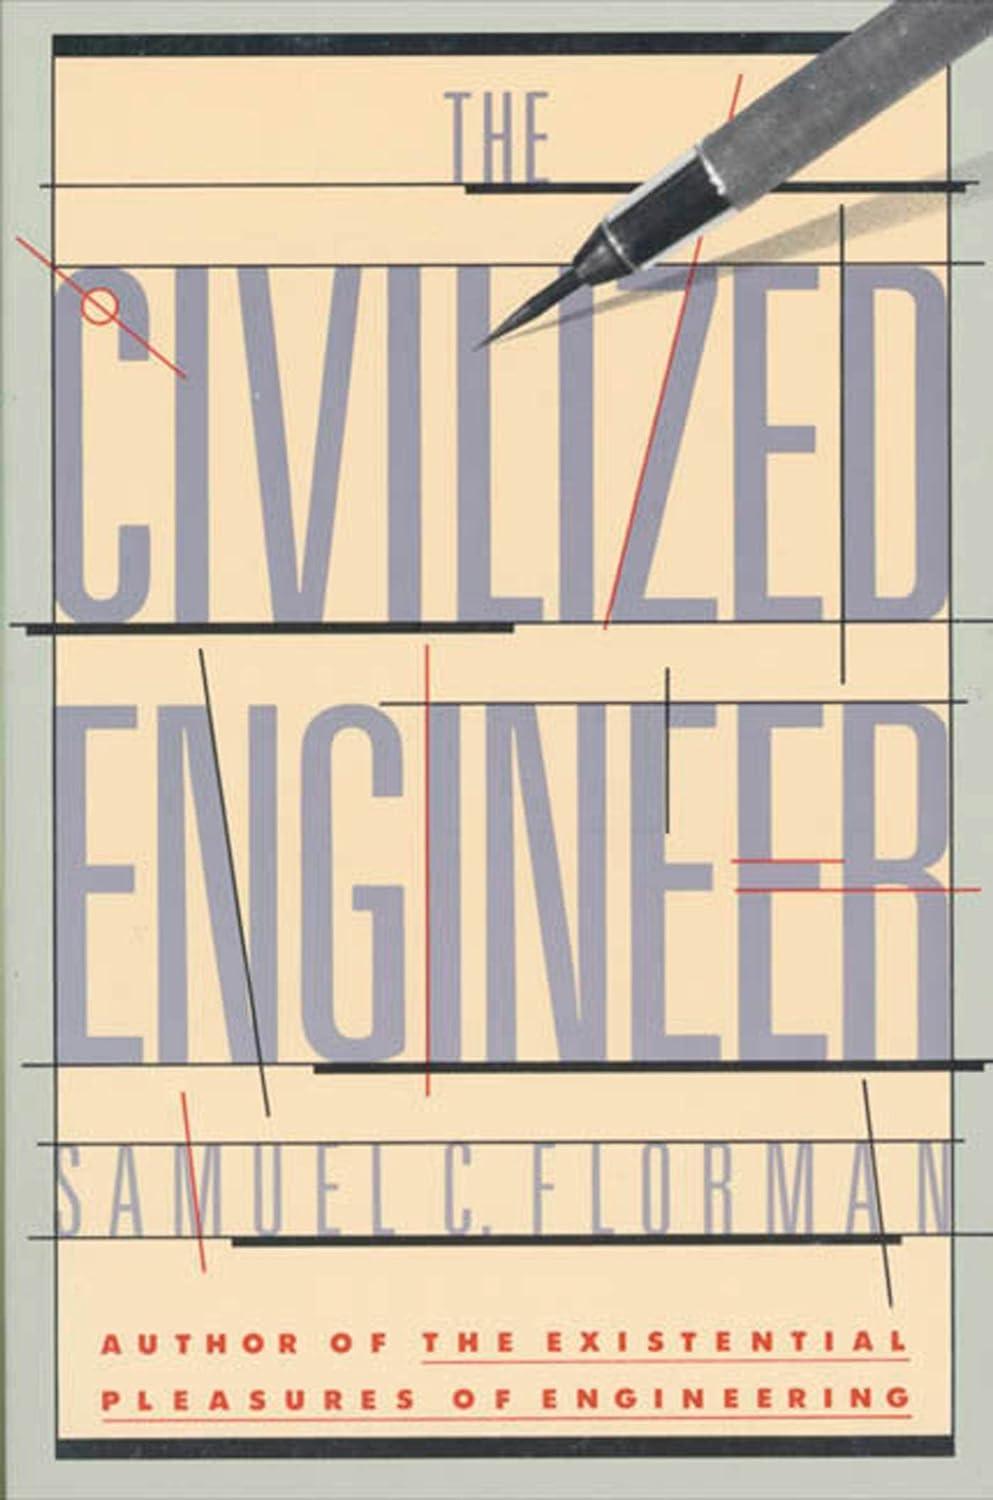 the civilized engineer 1st edition samuel c. florman 0312025599, 978-0312025595